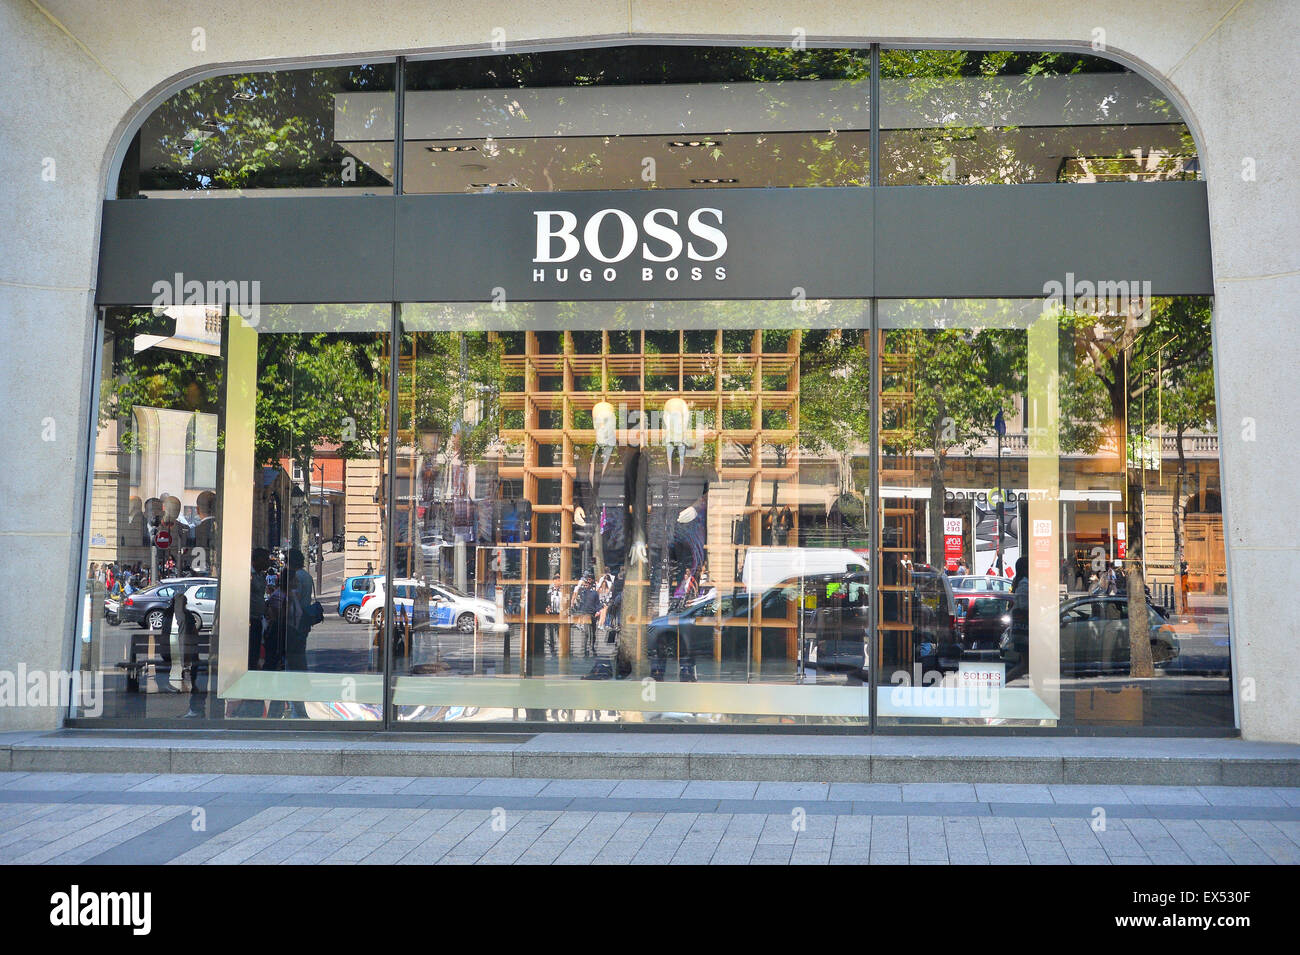 Magasin Hugo Boss Paris 100% Genuine, 58% OFF | evanstoncinci.org